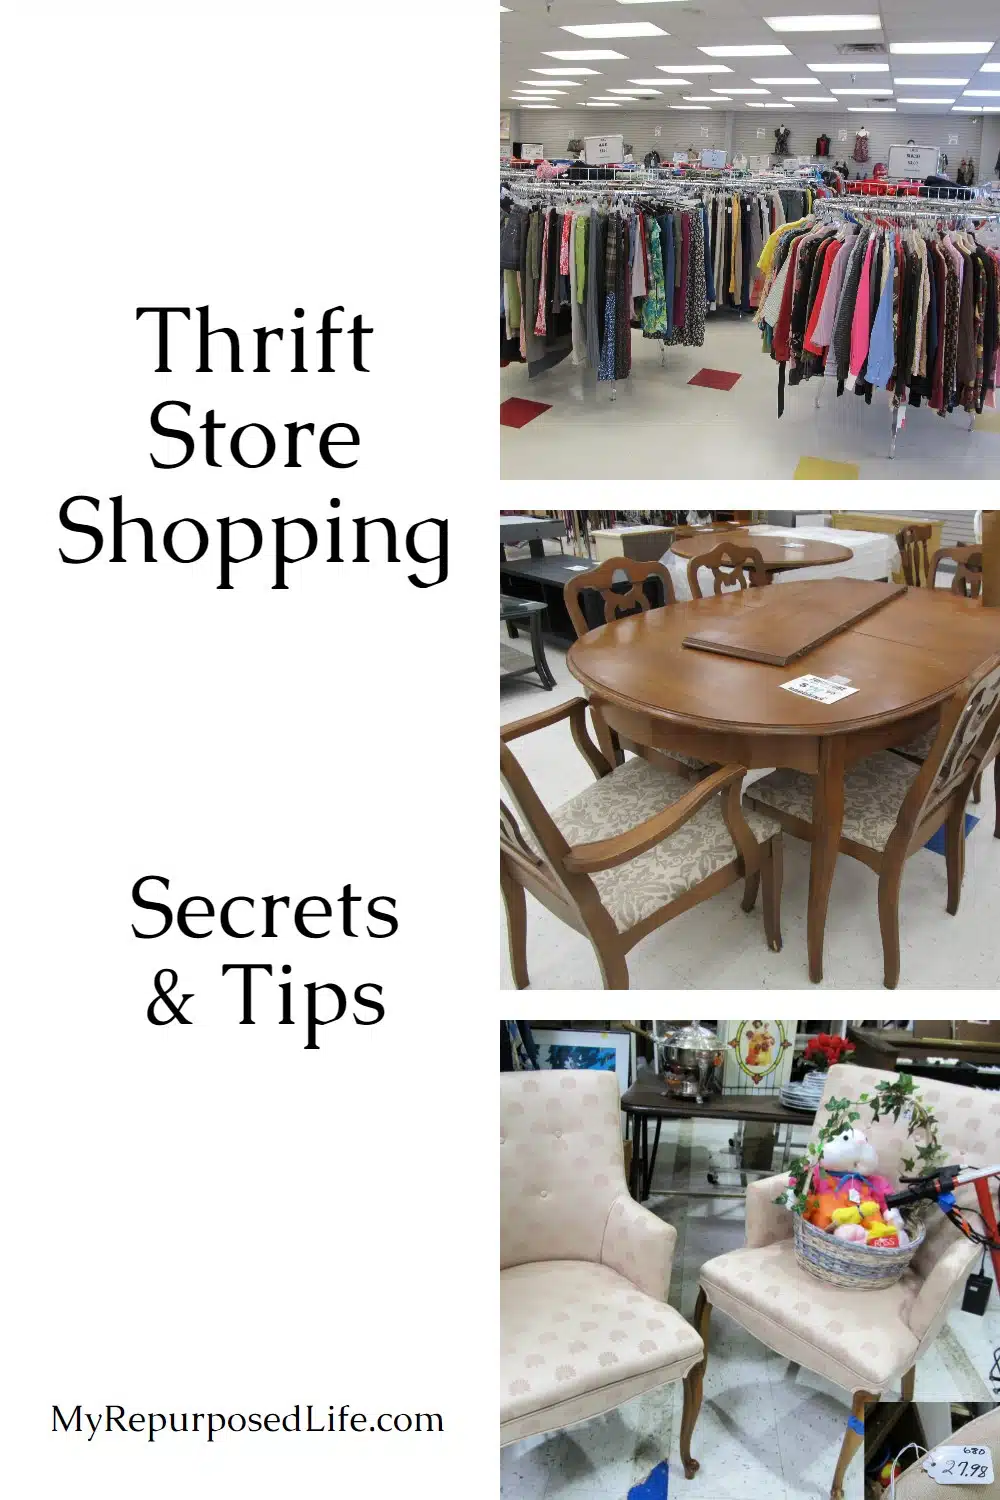 Thrifty shopping secrets